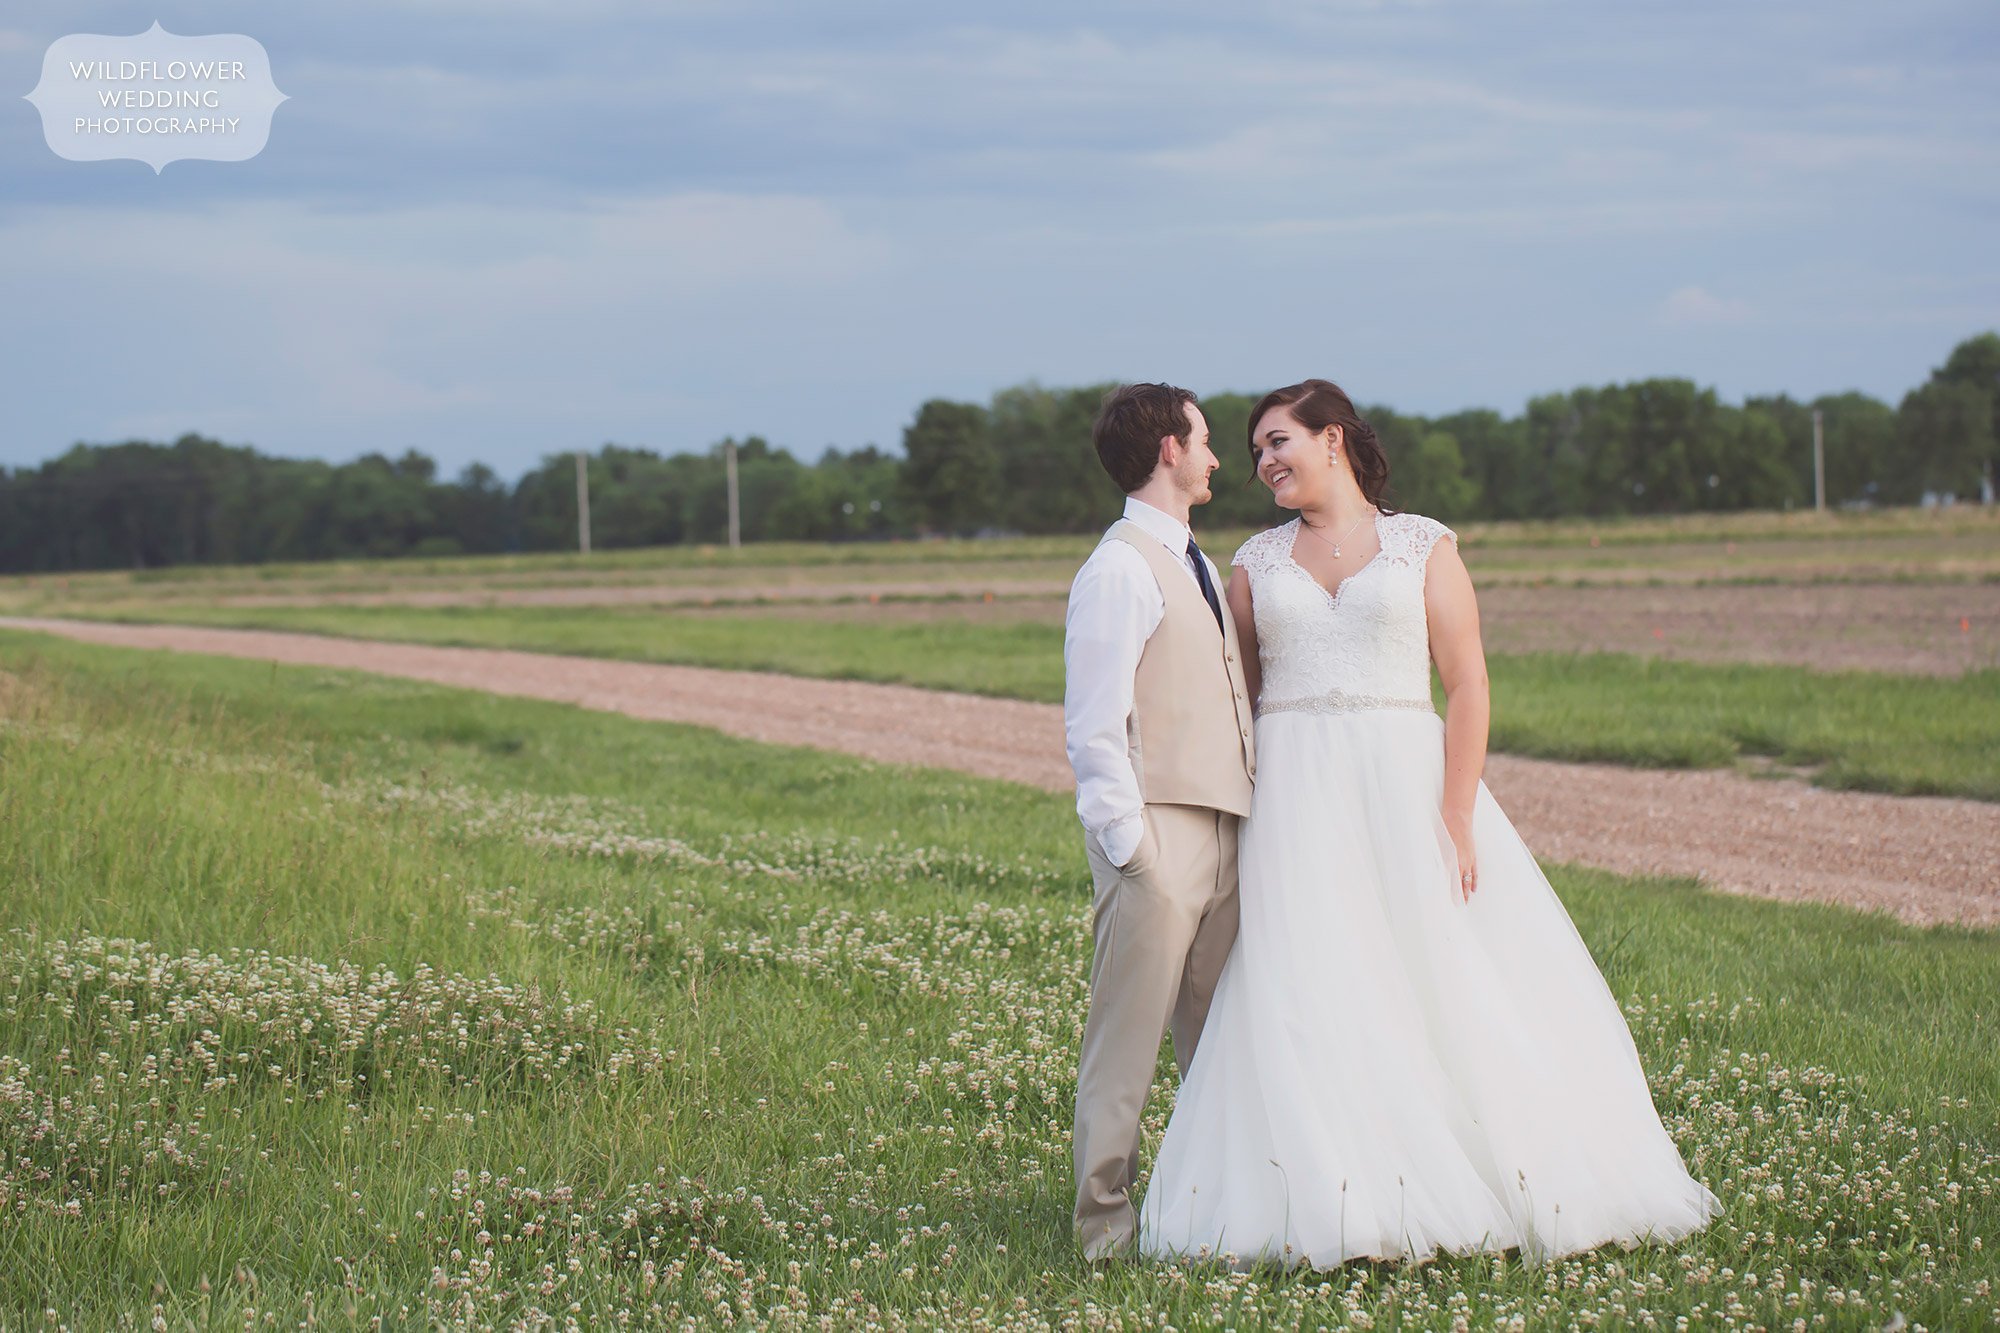 Bradford Farm Country Wedding – Alyssa & Zack